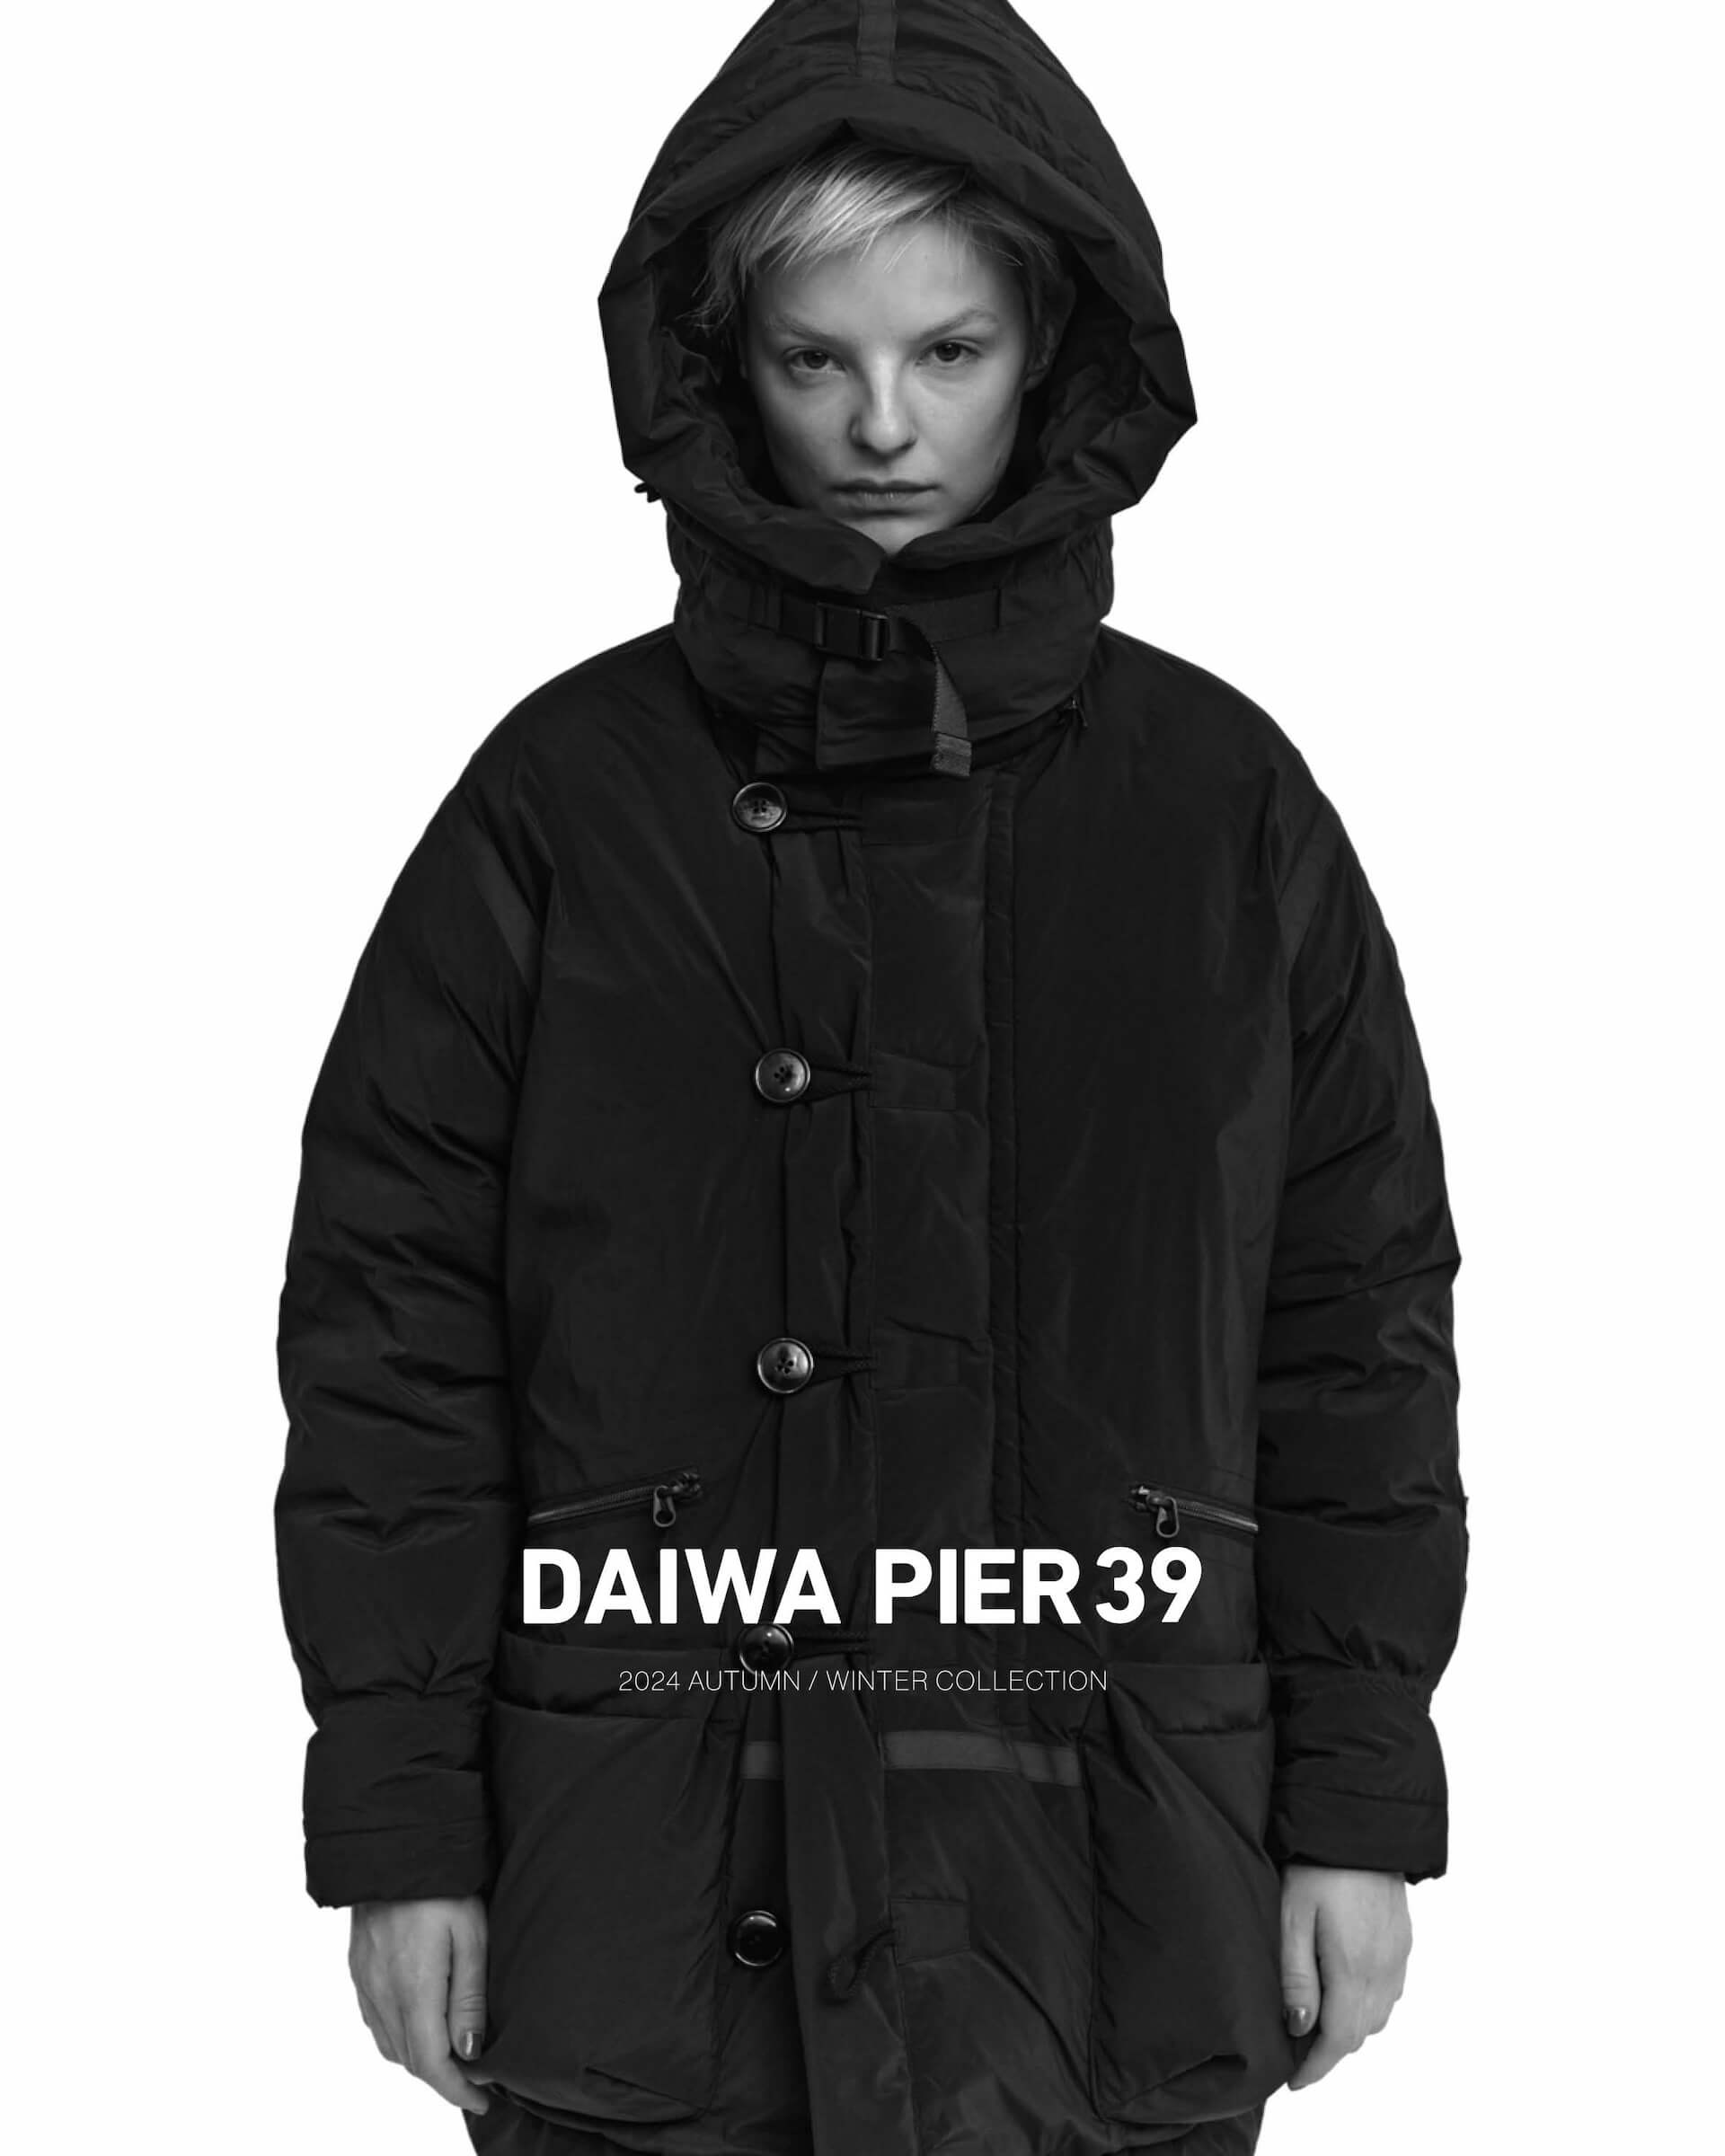 DAIWA PIER39の2024年秋冬コレクションが発表｜ミリタリーの機能美と2000年代のエクストリームスポーツのエッセンスが融合したアイテムが登場 lifefashion240719-daiwa-pier397